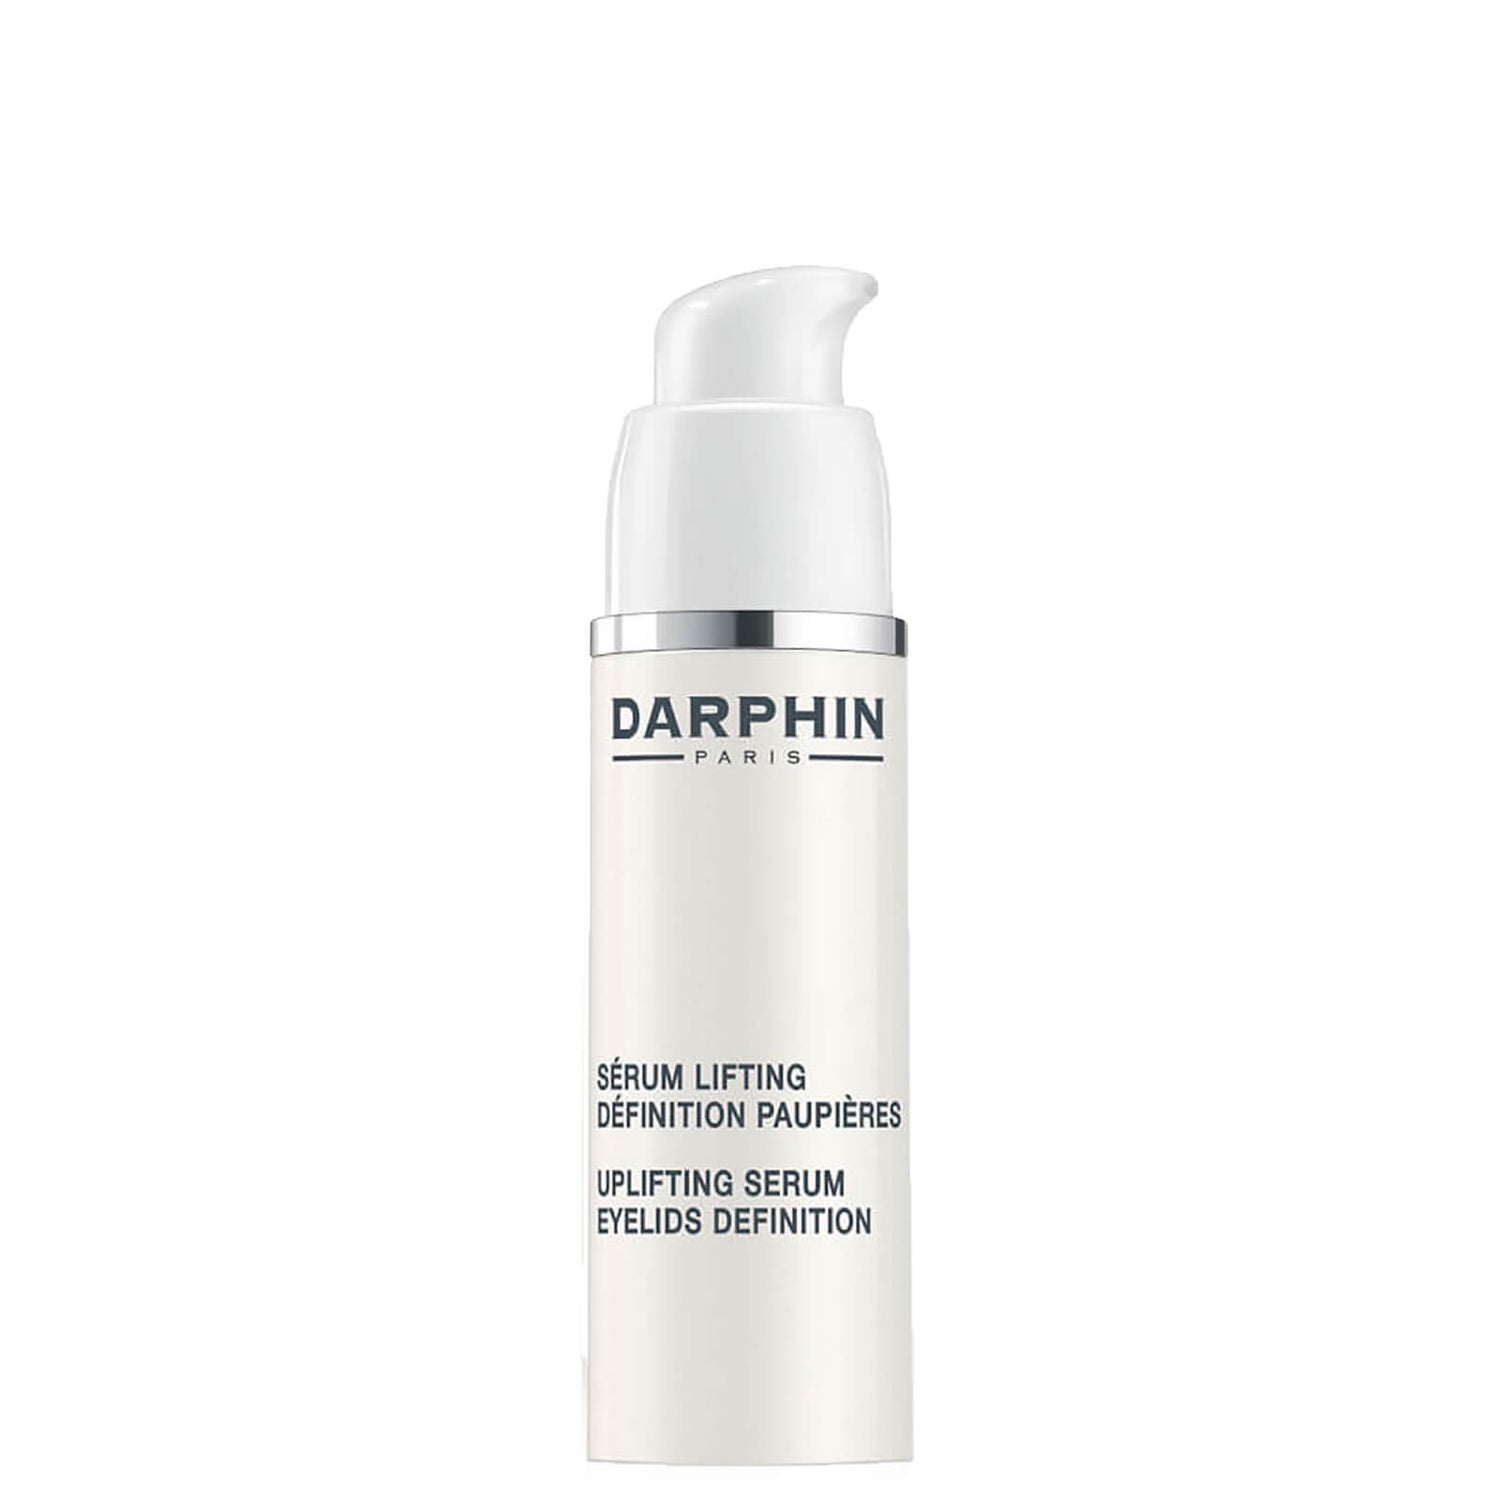 Darphin Uplifting Serum Eyelids Definition (0.5 oz.)